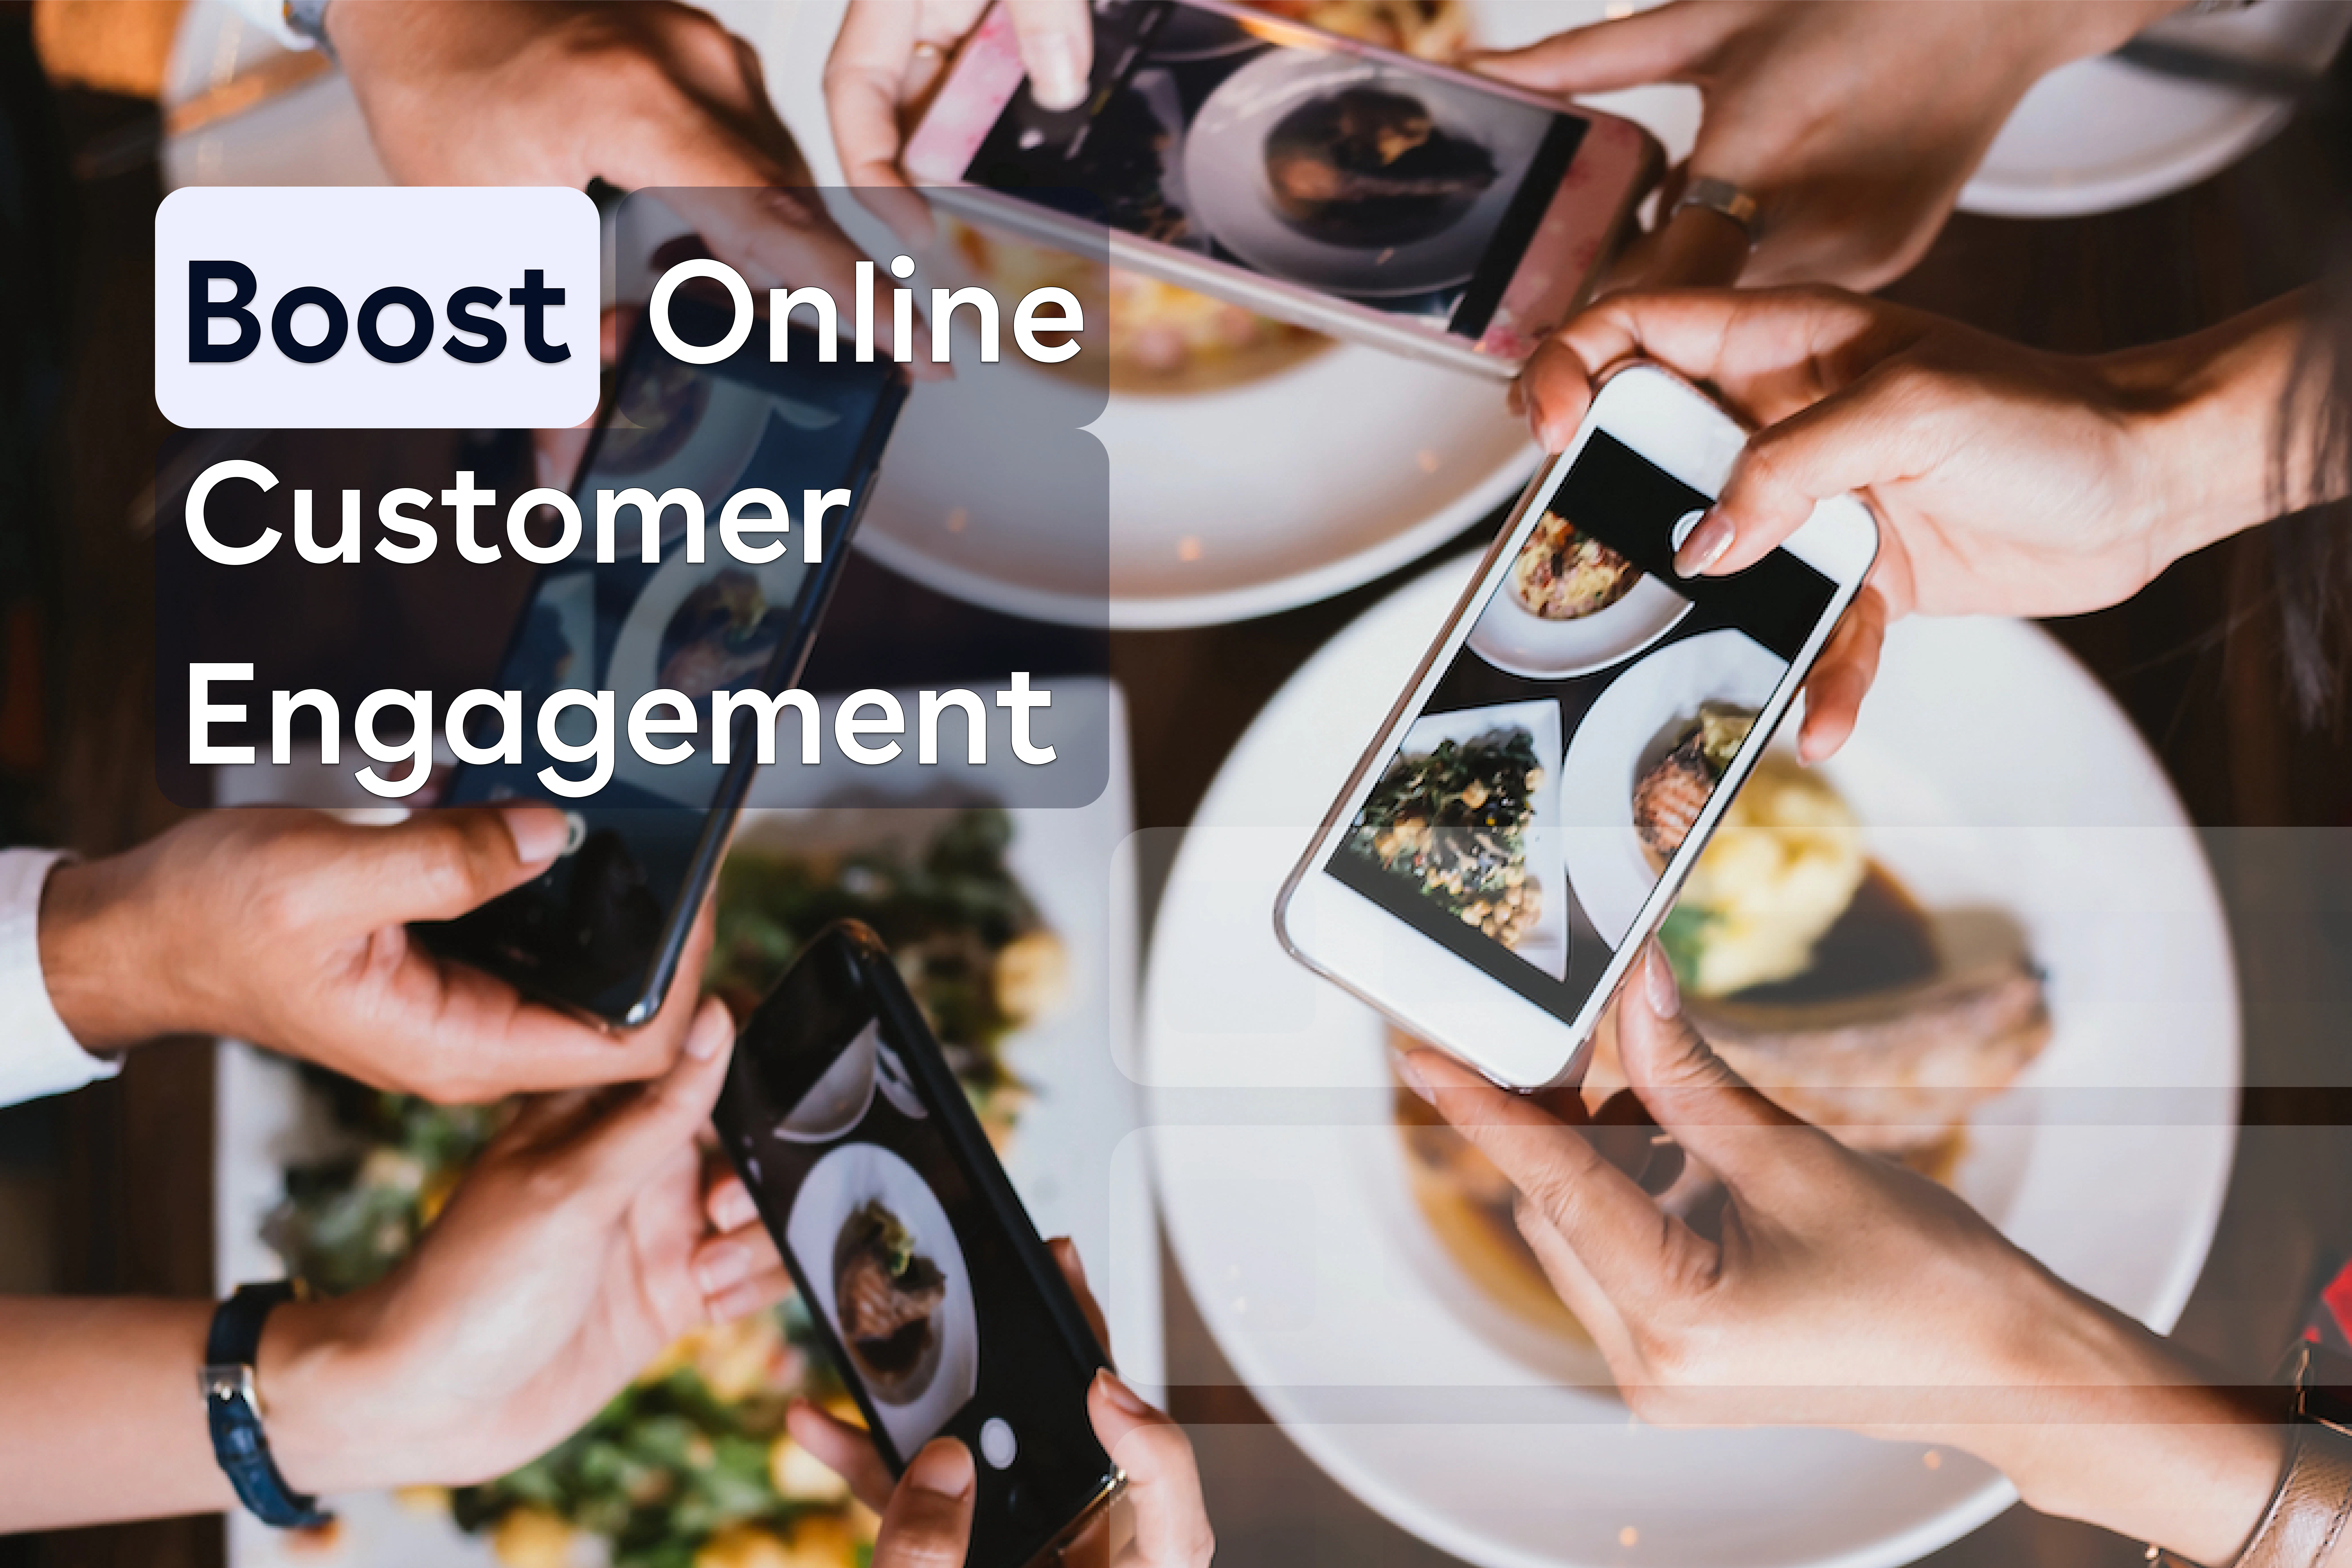 Online Customer Engagement